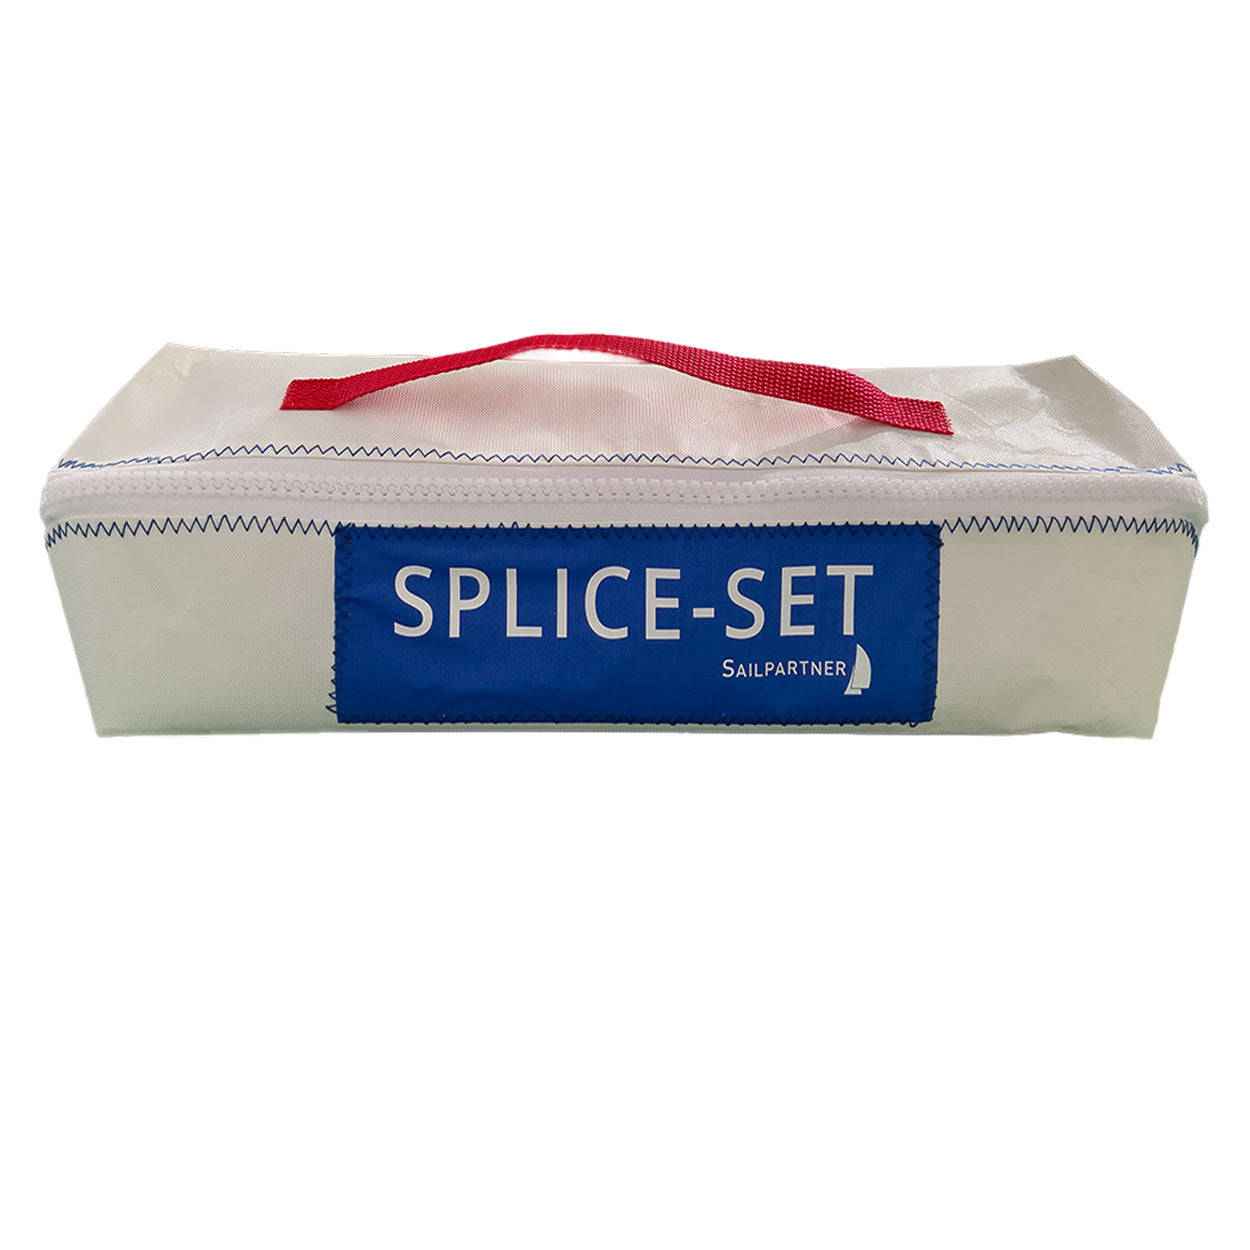 Splice-Set / Spleiss-Set